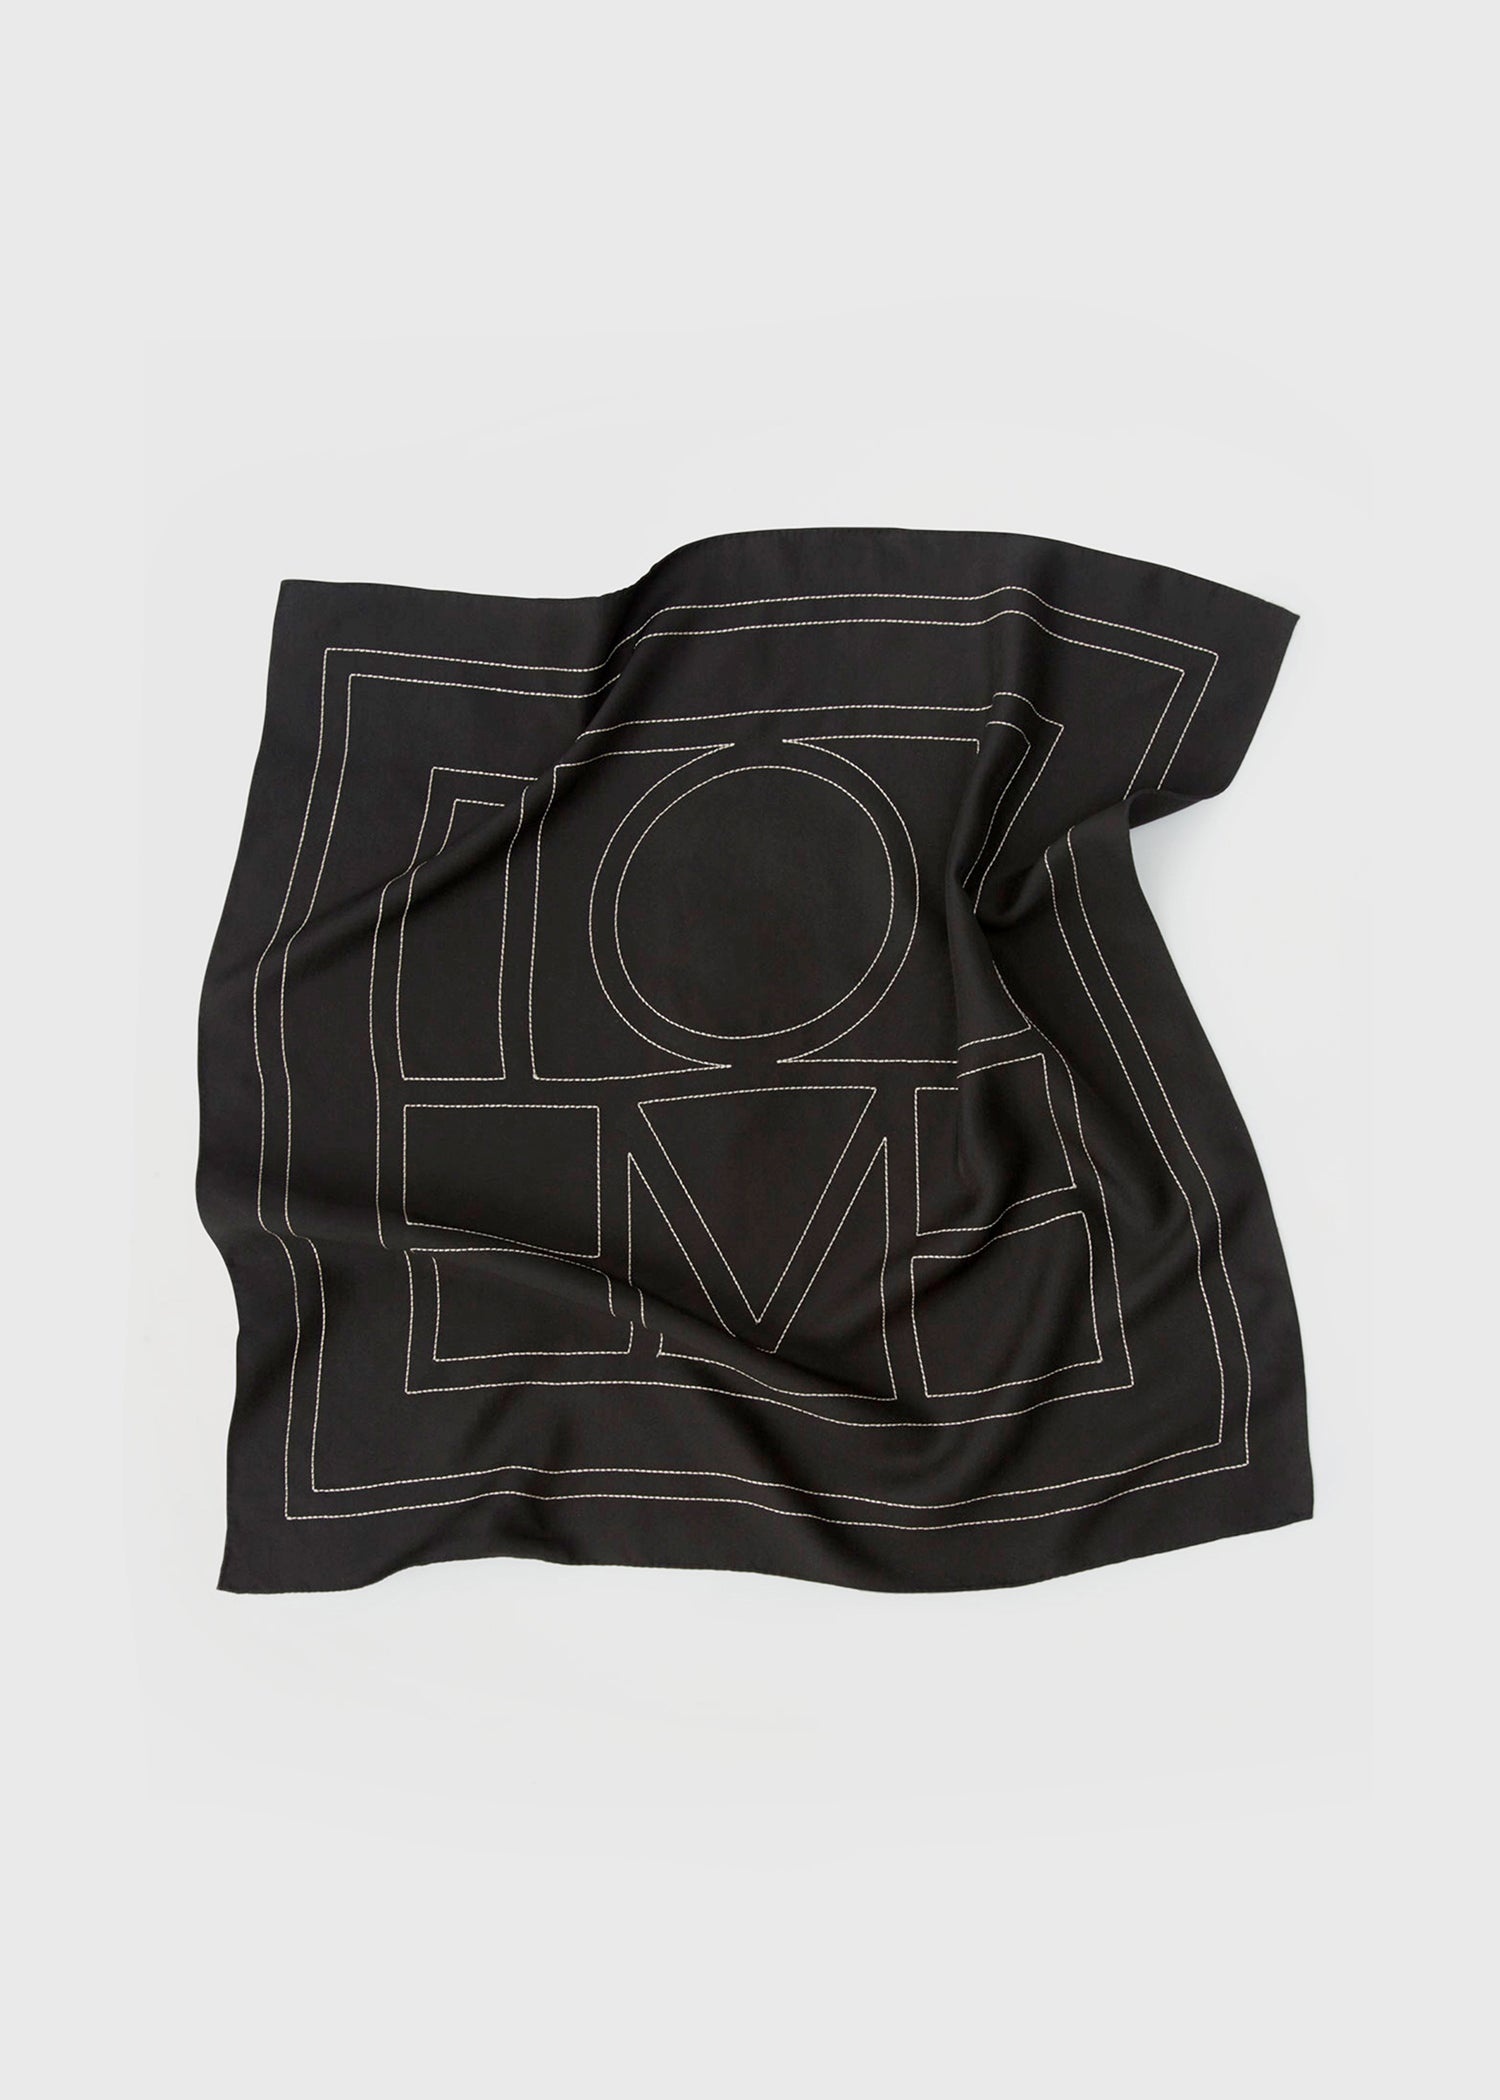 Embroidered monogram silk scarf black - 4